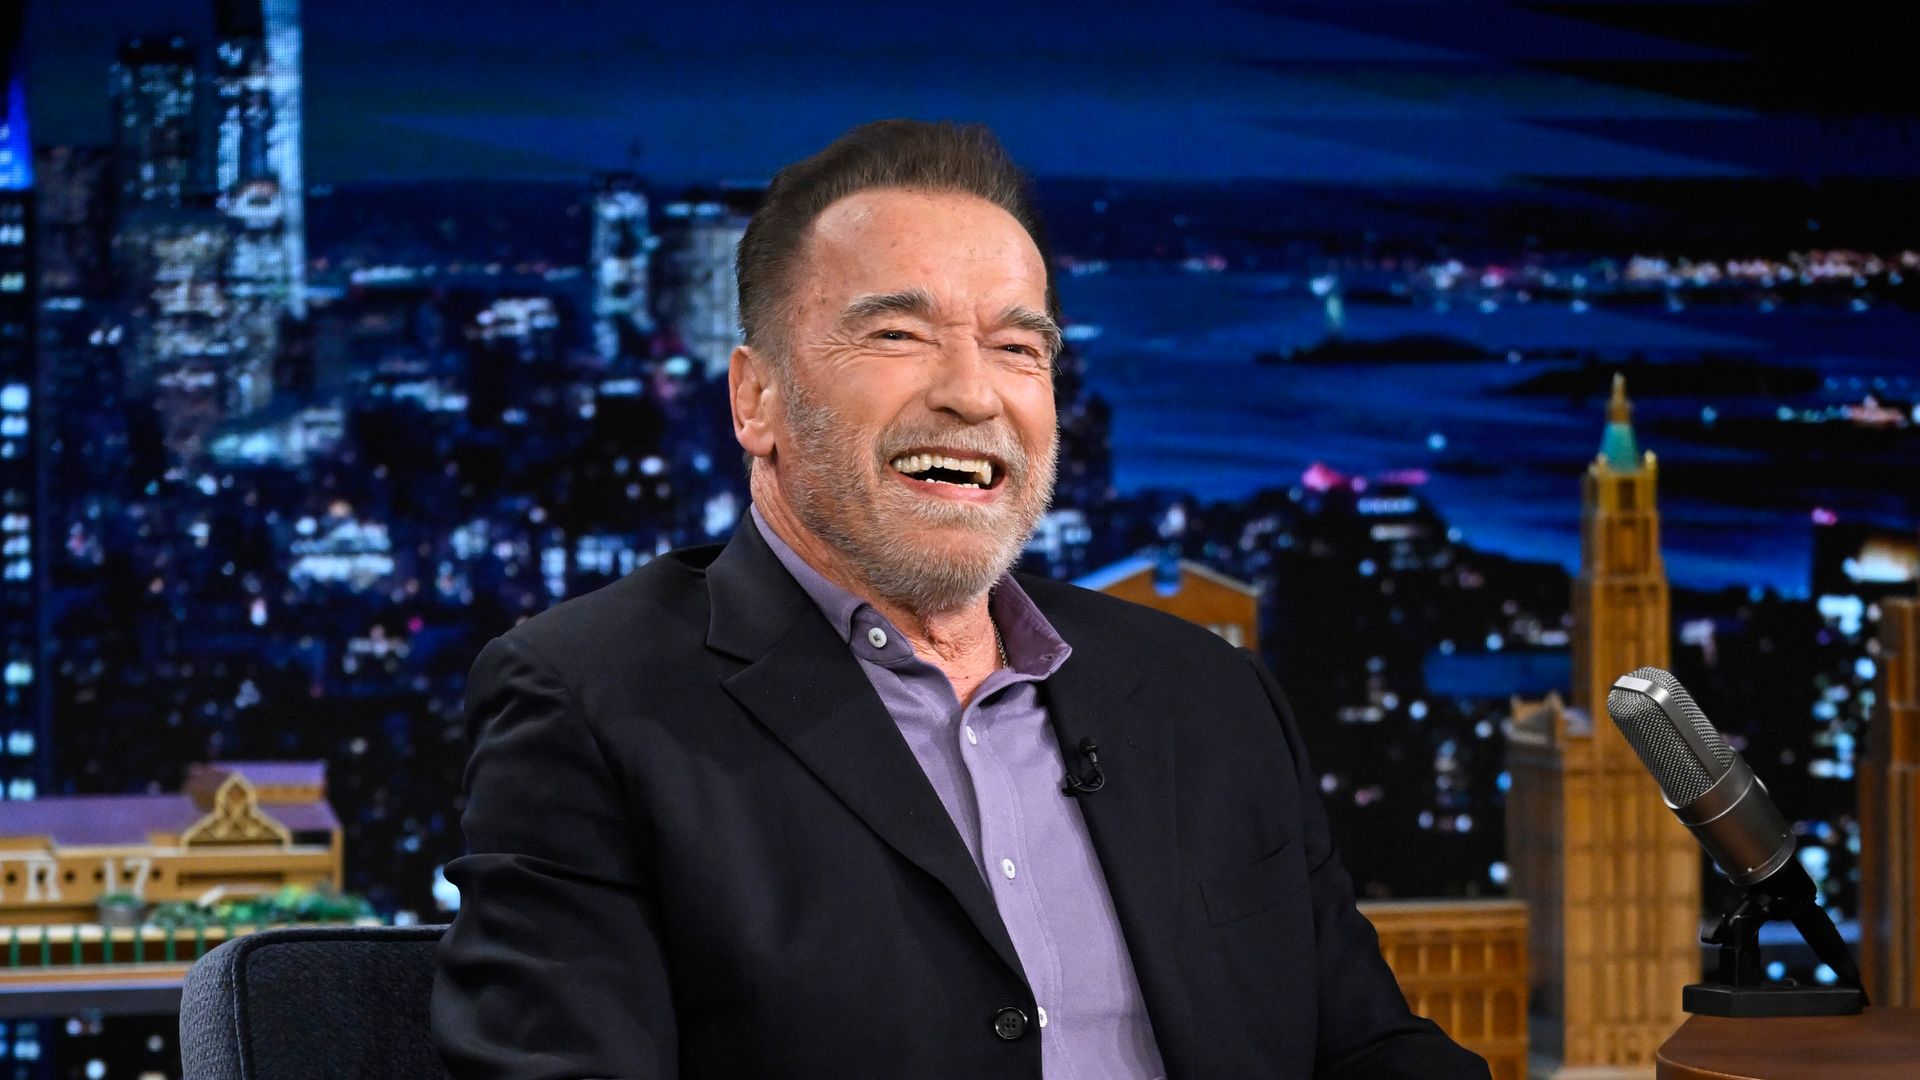 Arnold Schwarzenegger 'Kindergarten Cop' child co-star recalls memorable time together